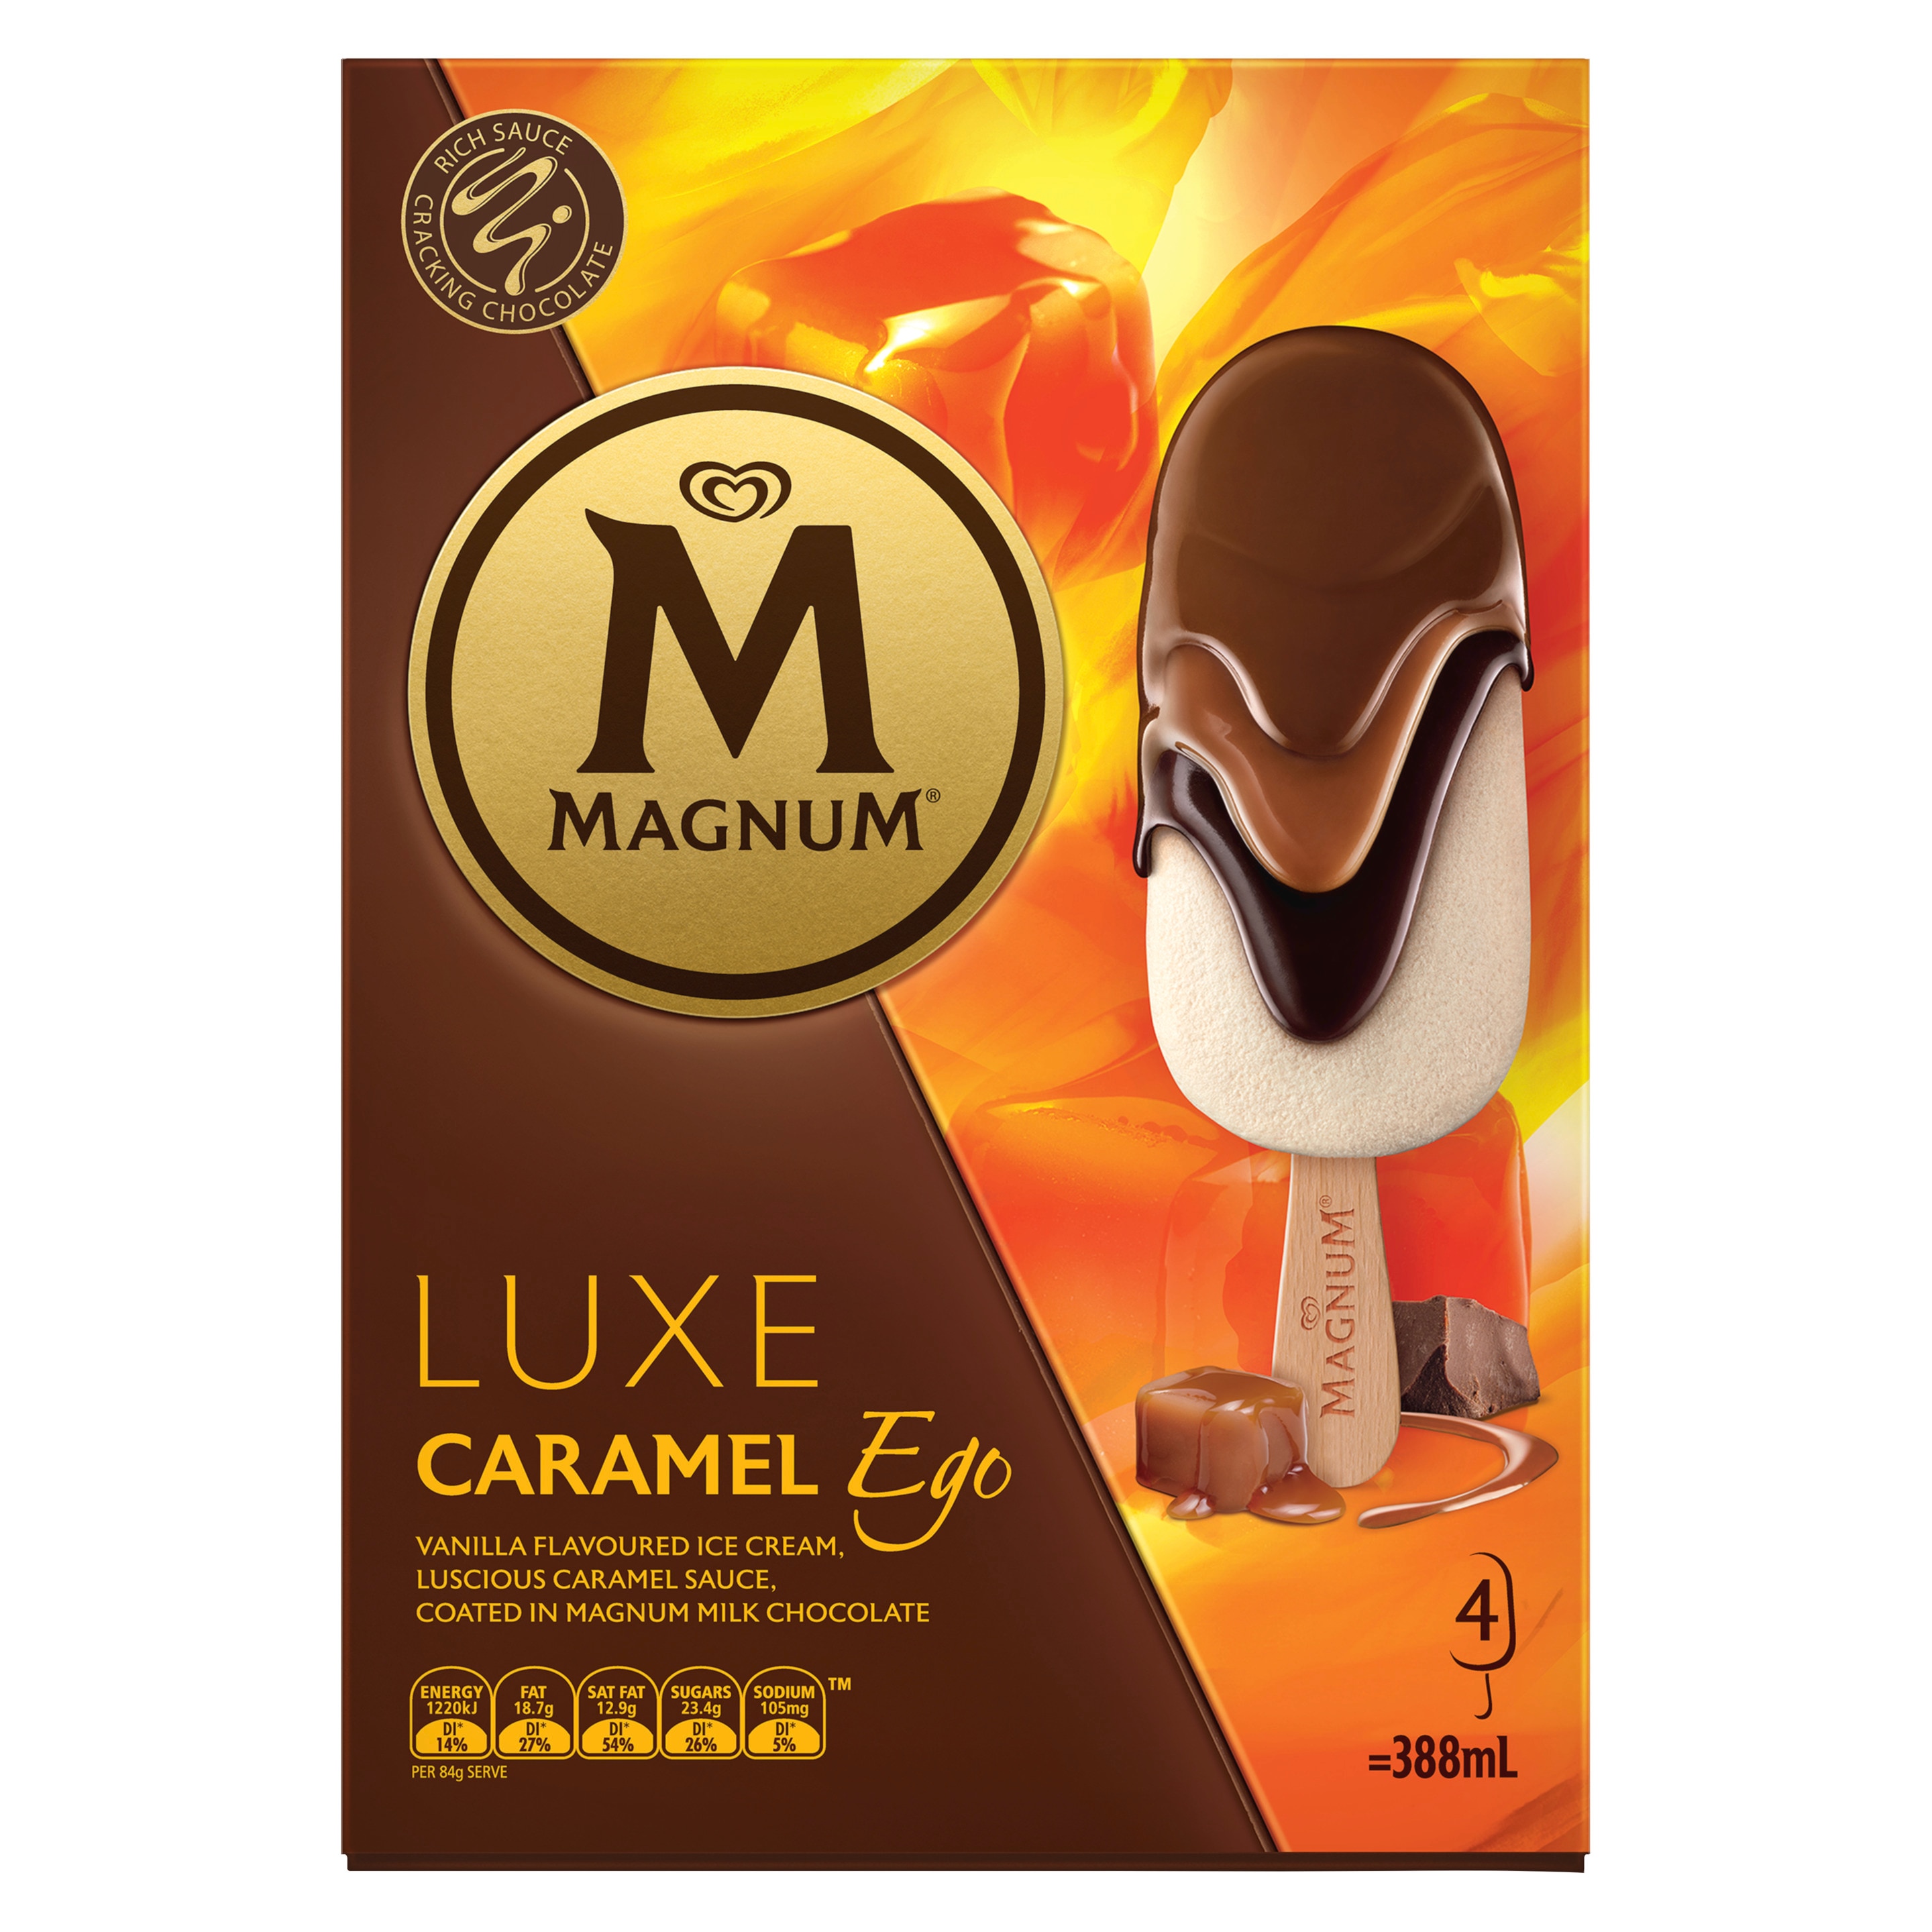 Magnum Caramel Ego LUXE Multipack x 4